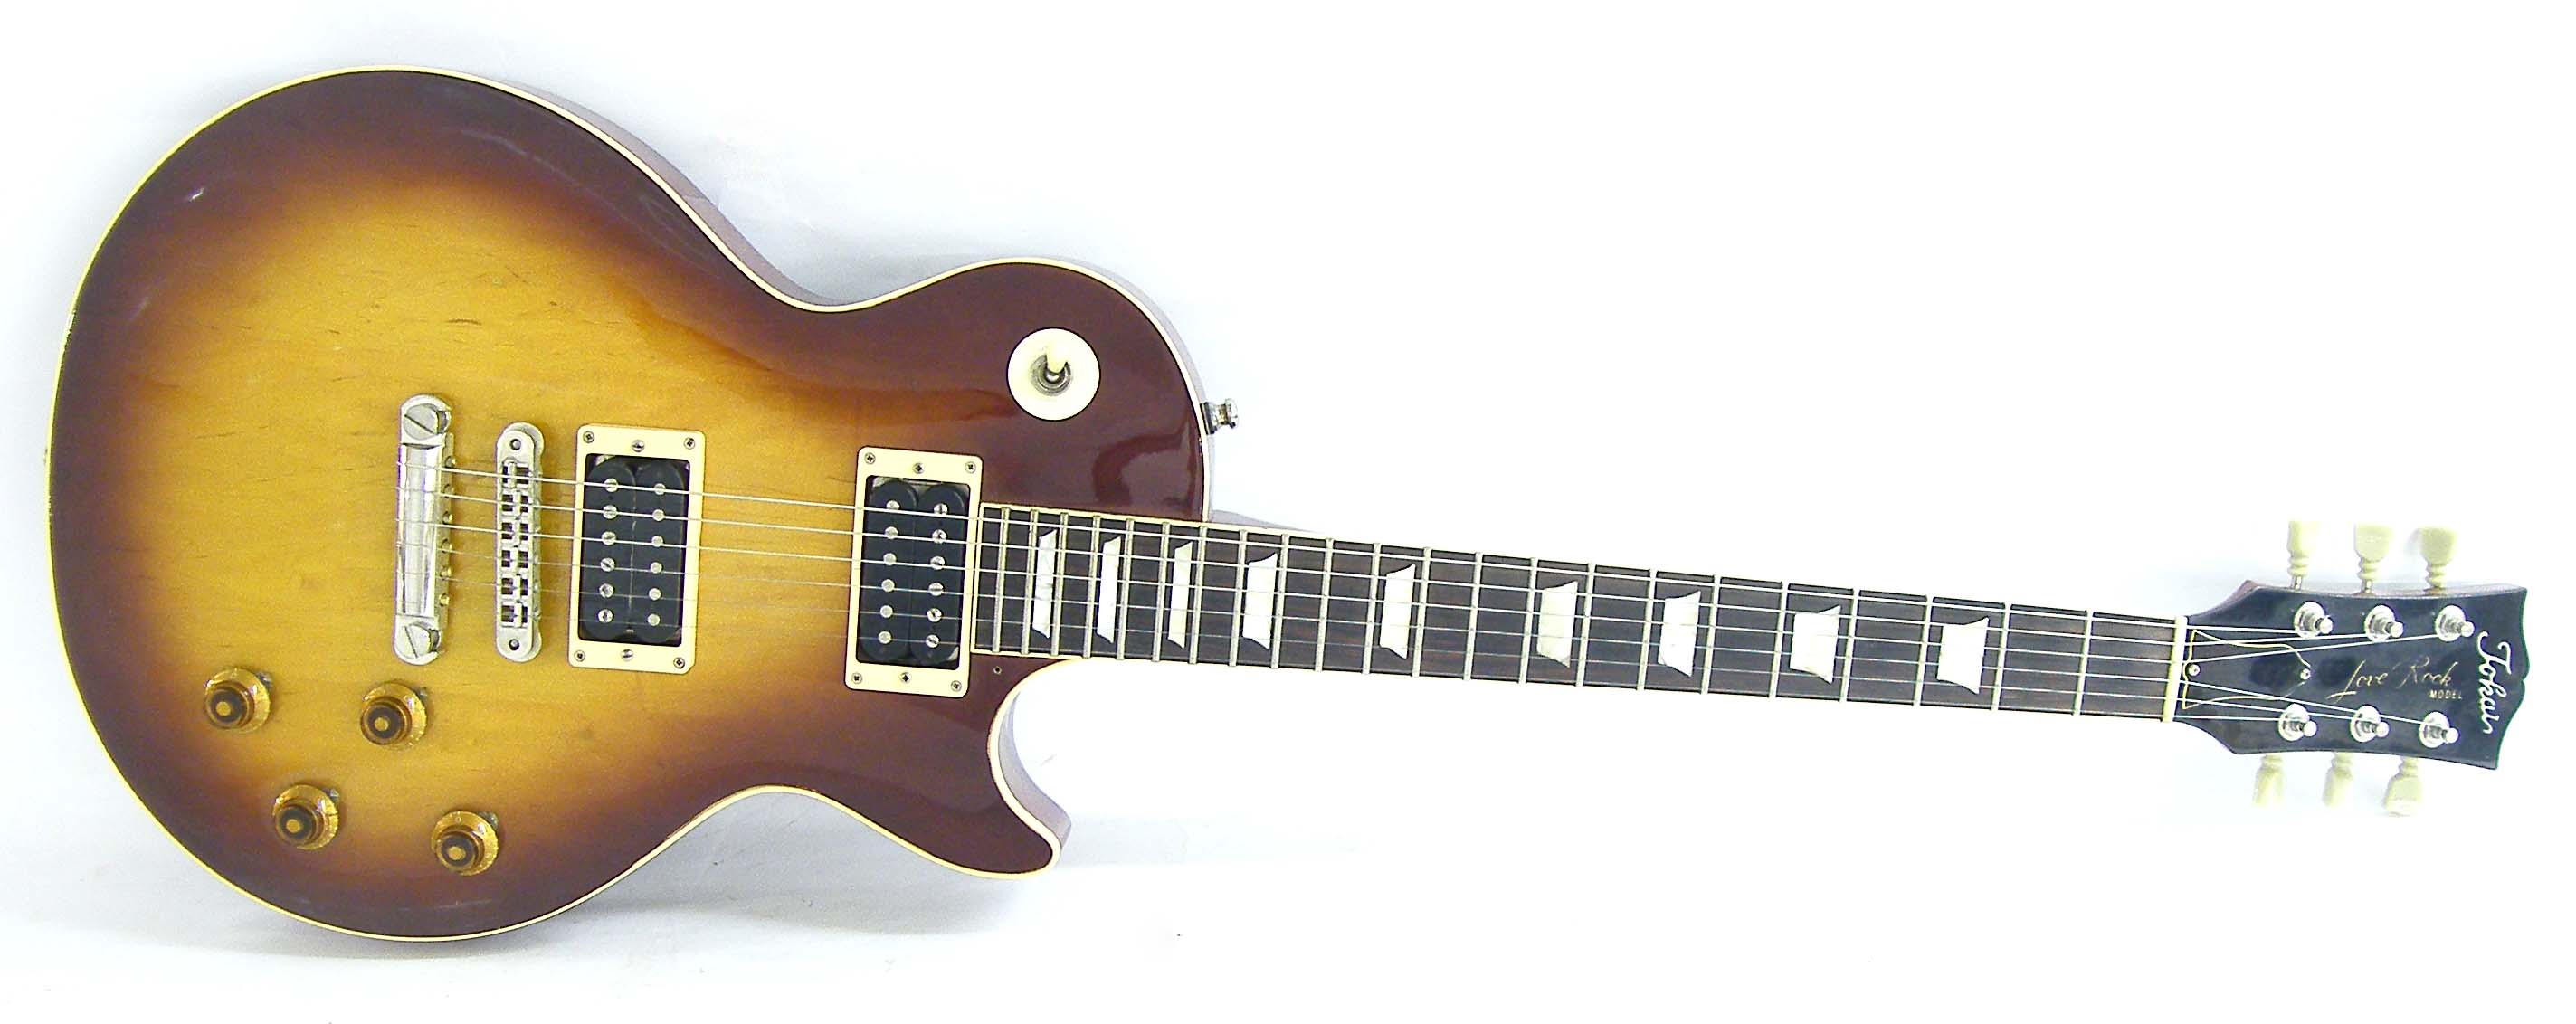 Tokai Love Rock model electric guitar, made in Japan, circa 1981, ser. no. 1015235, brown sunburst